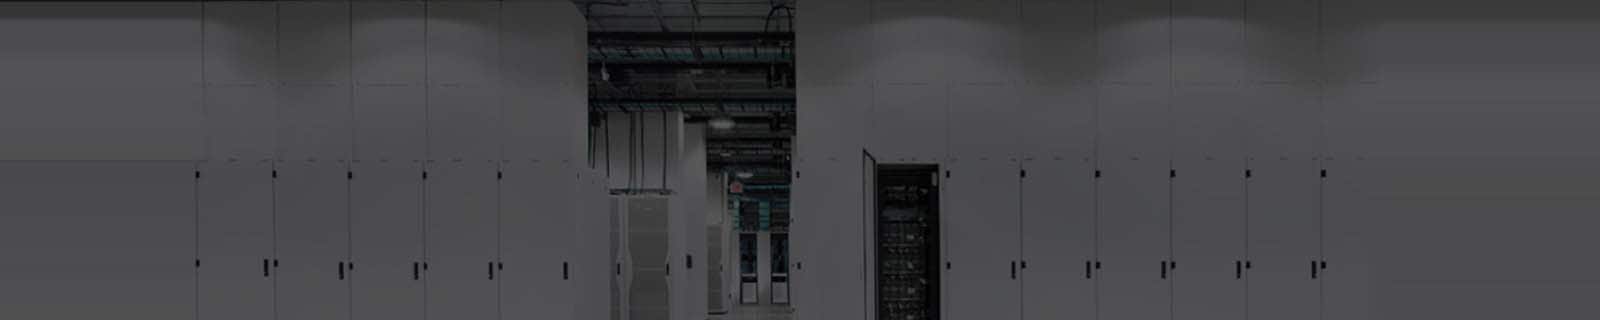 Data Center Switches Cisco Nexus Cisco